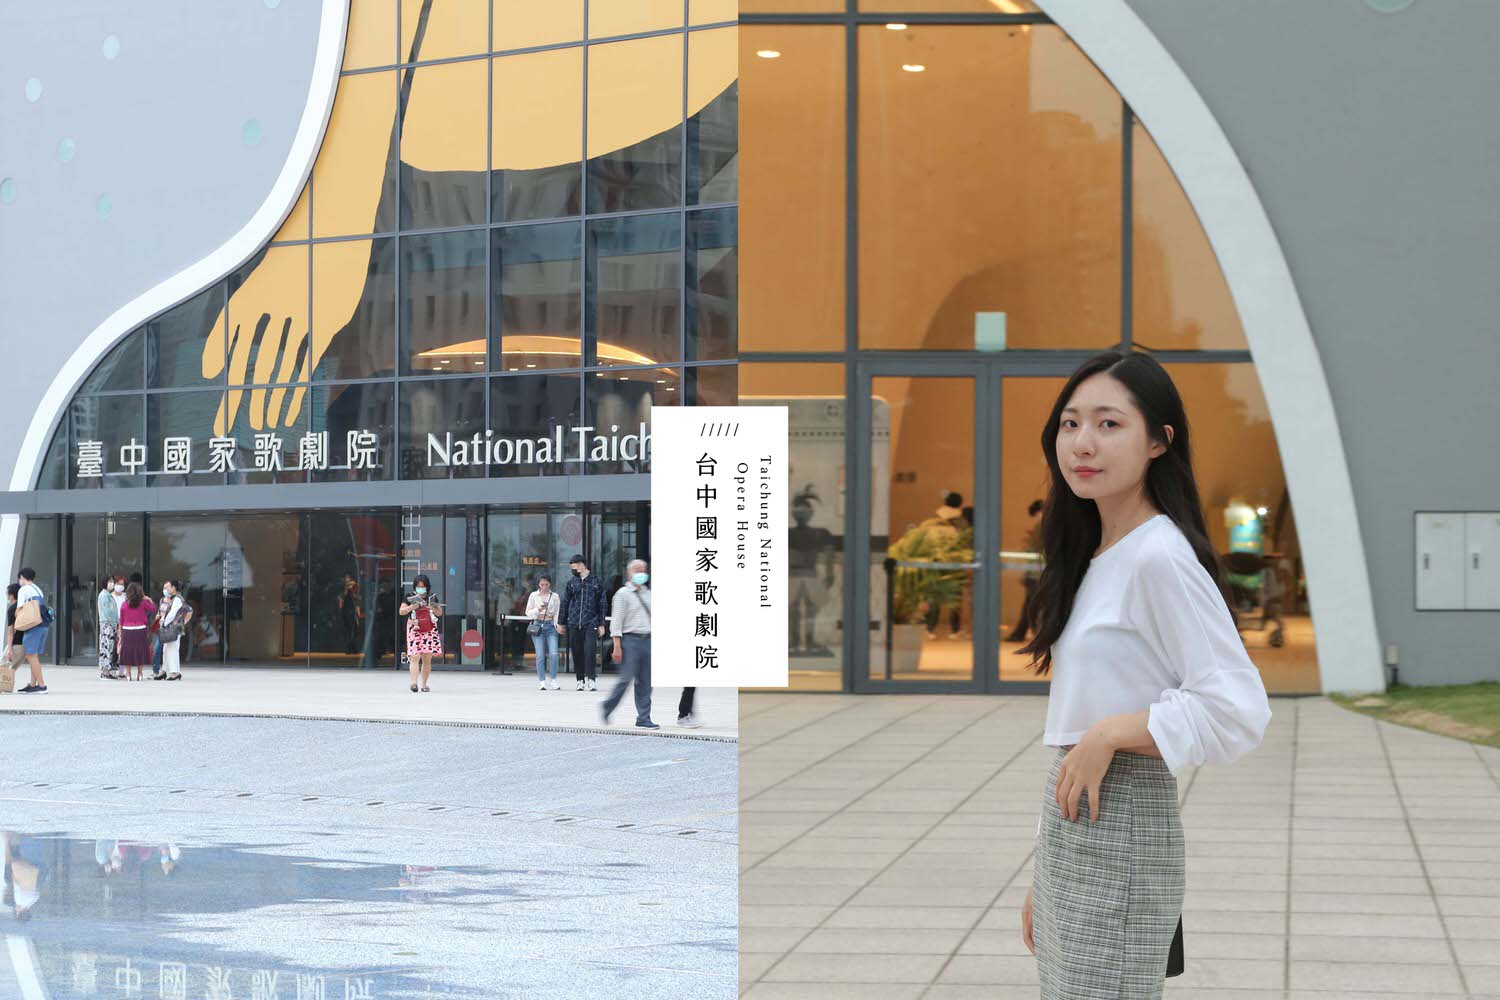 Taichung National Opera House